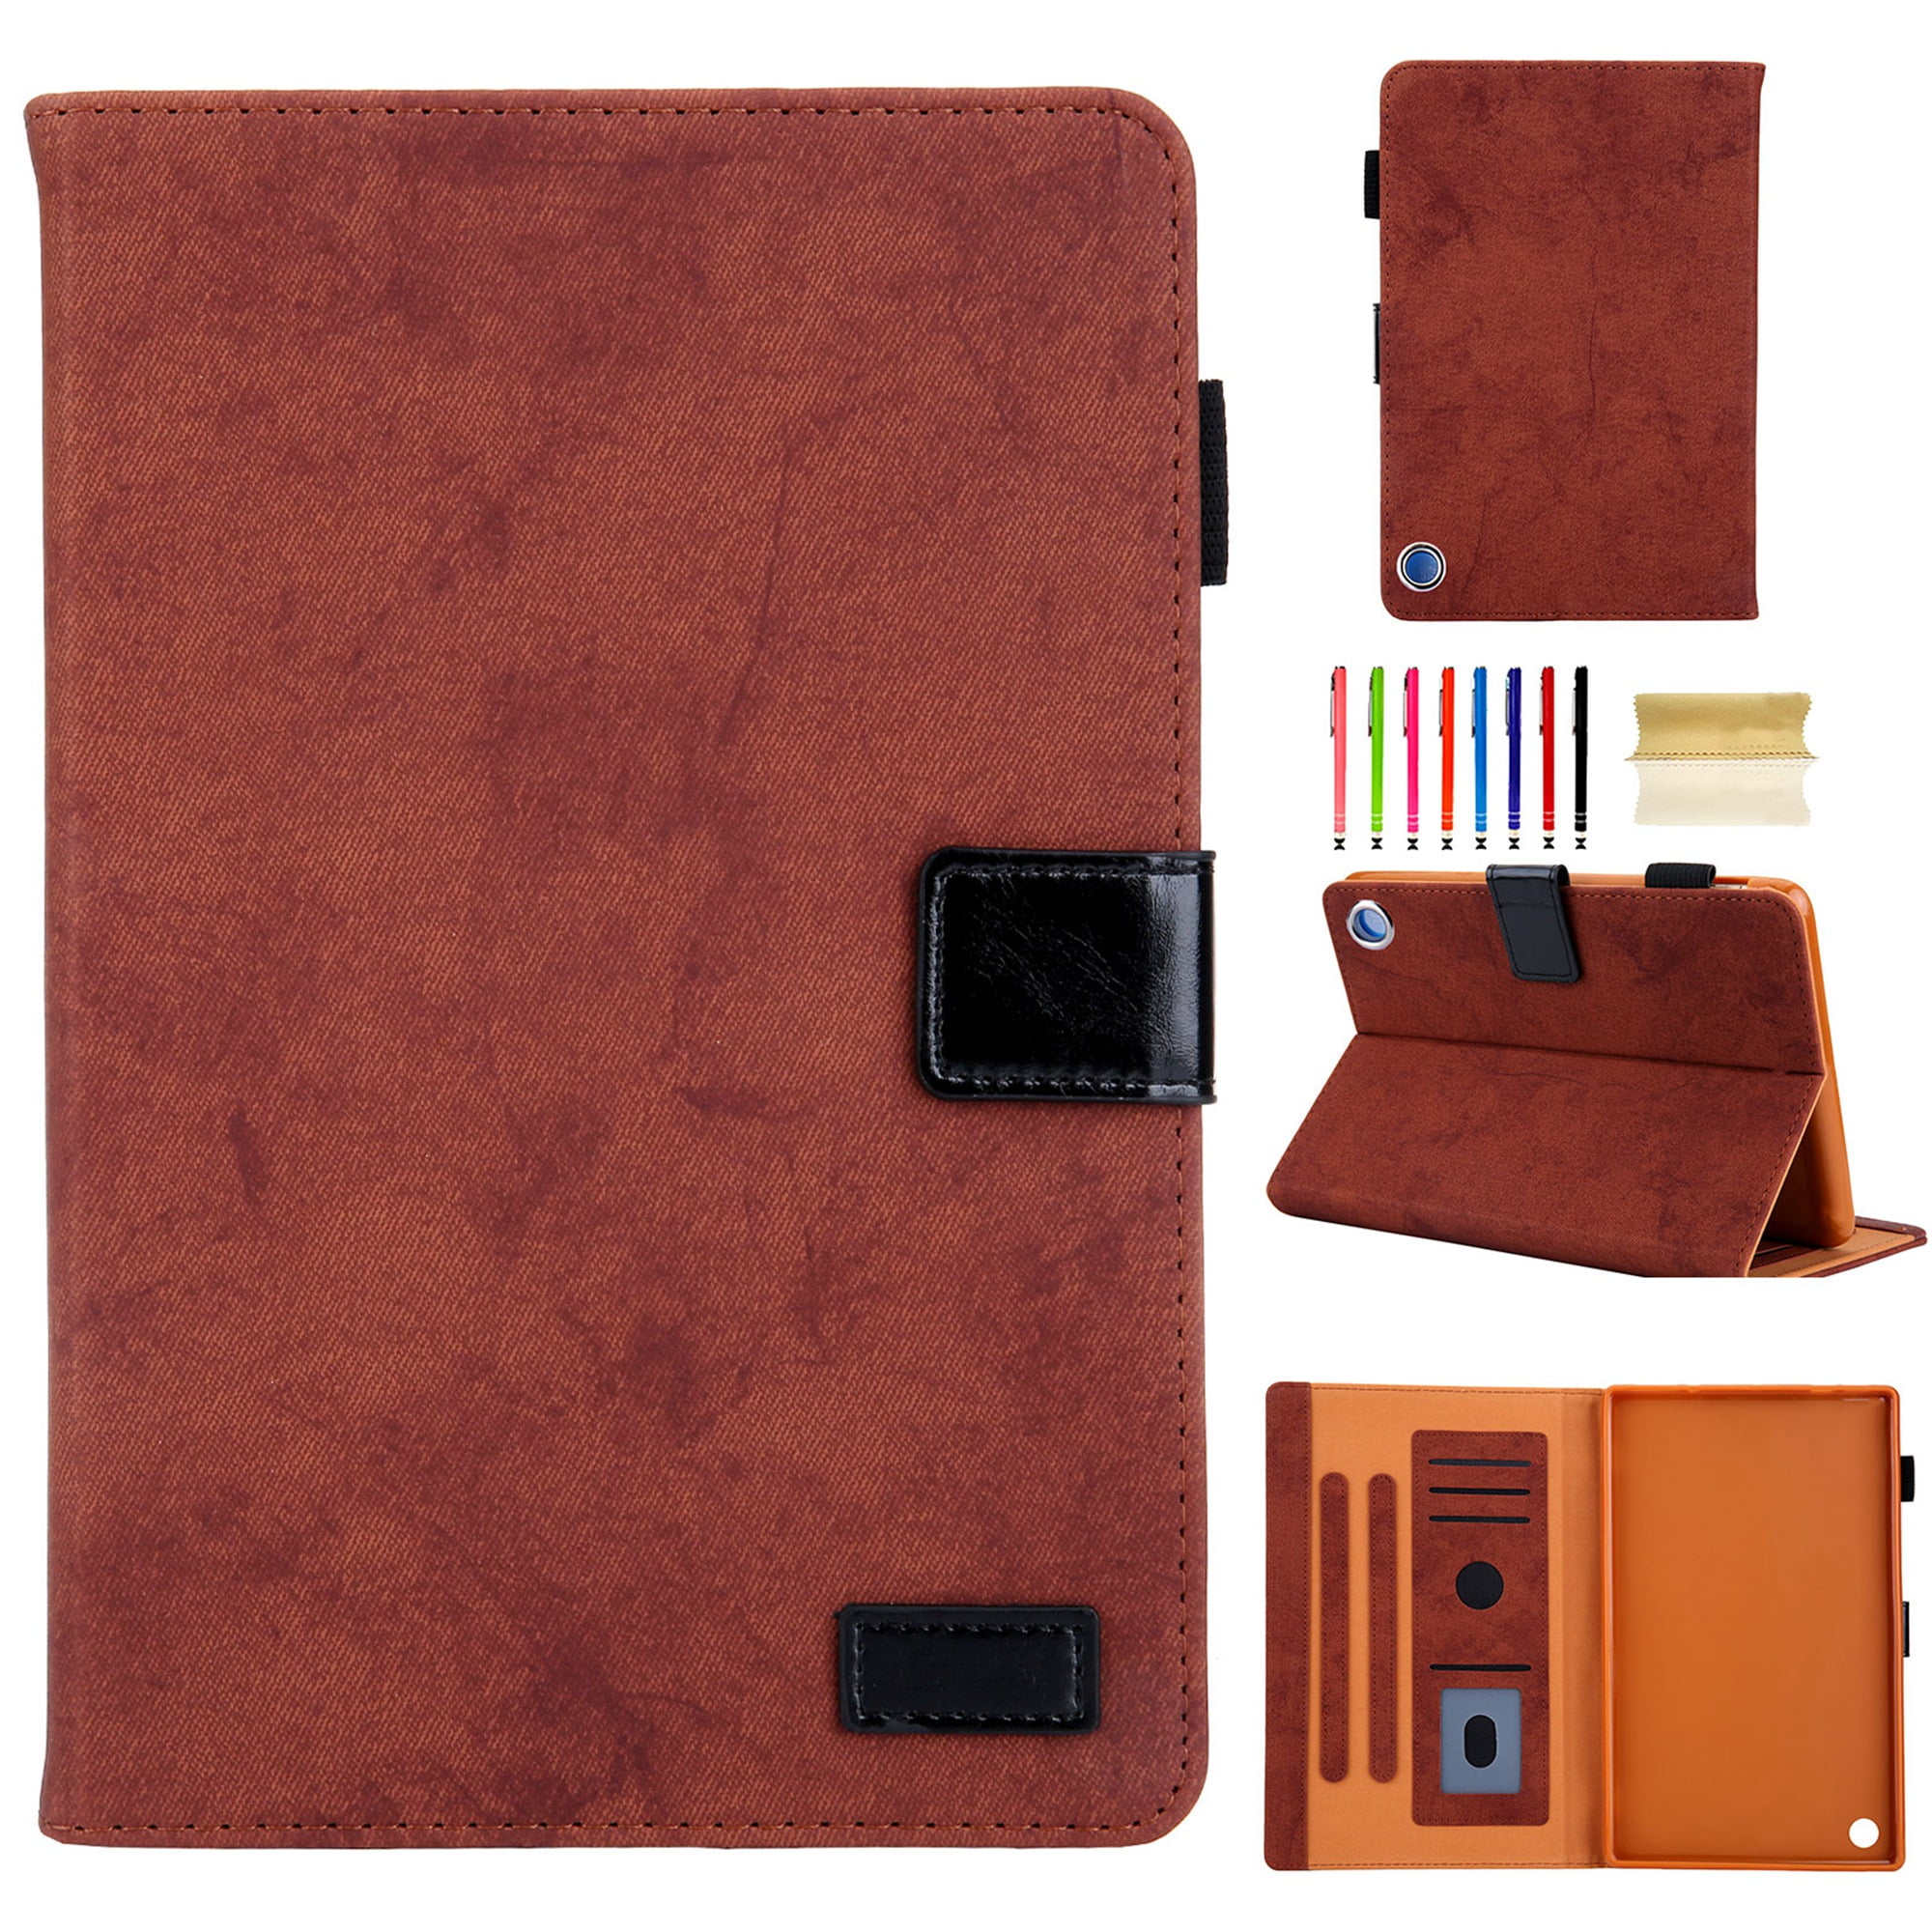 Kindle Fire HD 8 2020 Case - Dteck Folio PU Leather Smart Case Cover